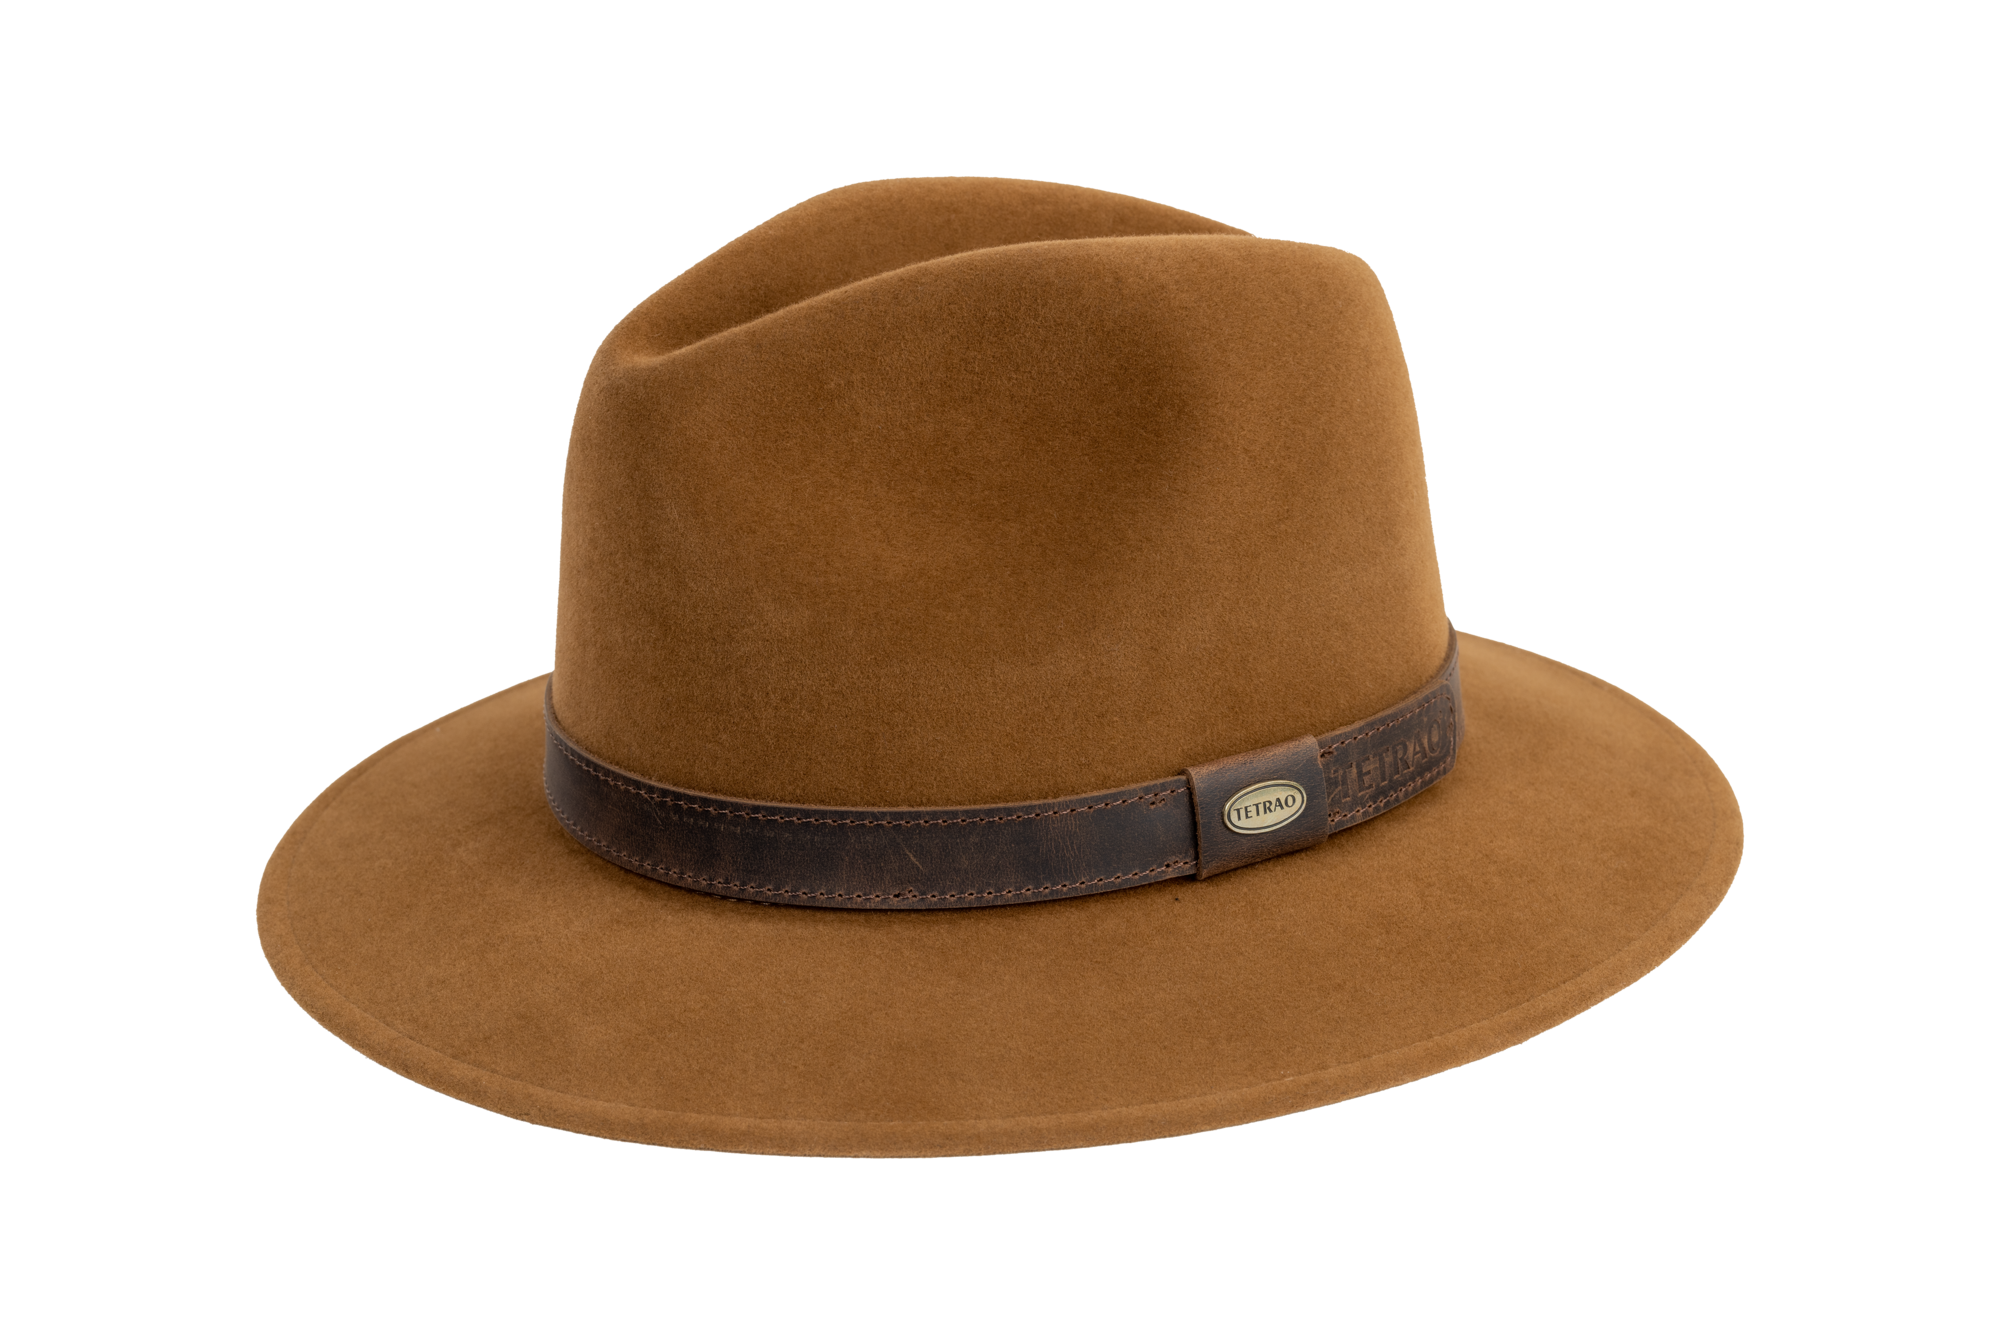 Poľovnícky klobúk TETRAO Exclusive zajac - hnedý  61